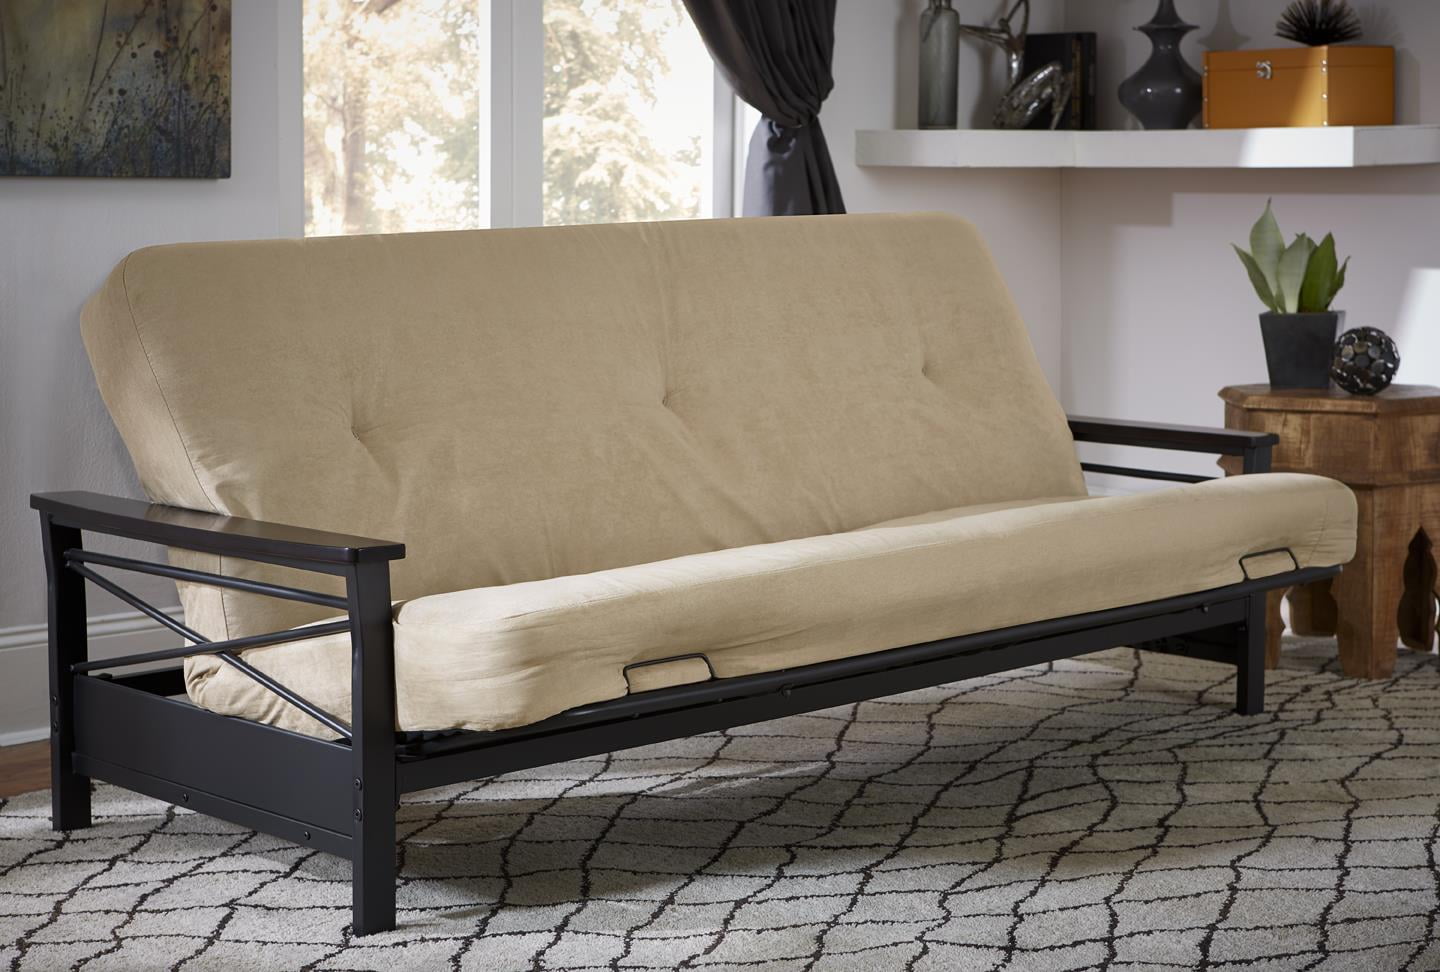 futon mattress springs inside